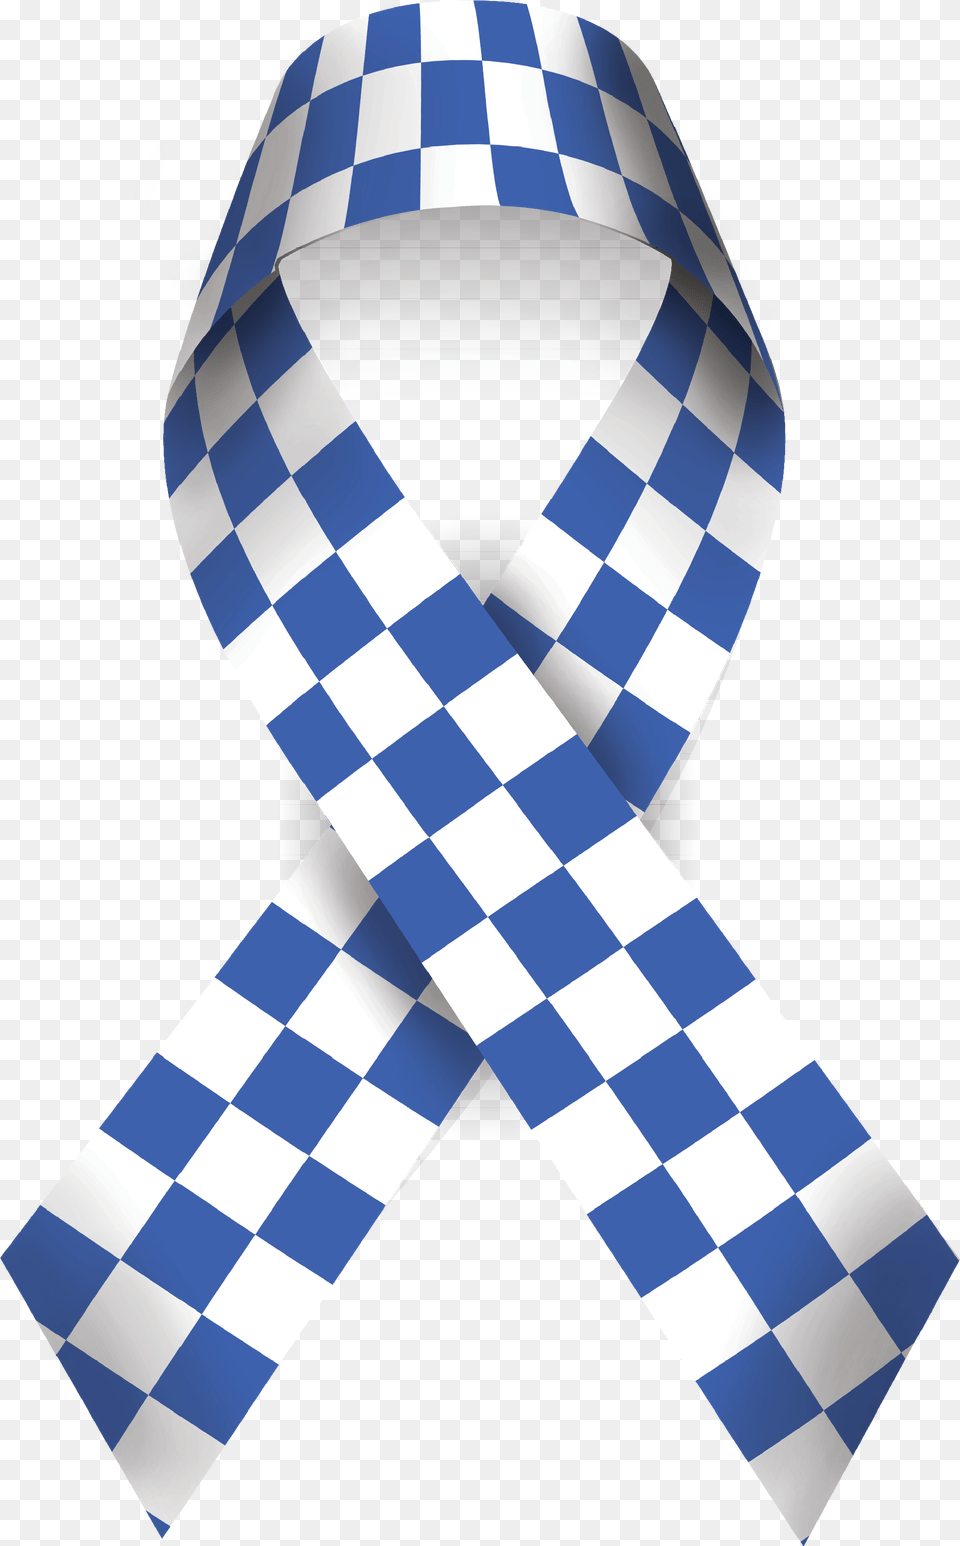 Vpbrf Check Ribbon Victoria Police Blue Ribbon Foundation Vic Police Blue Ribbon, Accessories, Formal Wear, Tie, Necktie Free Transparent Png